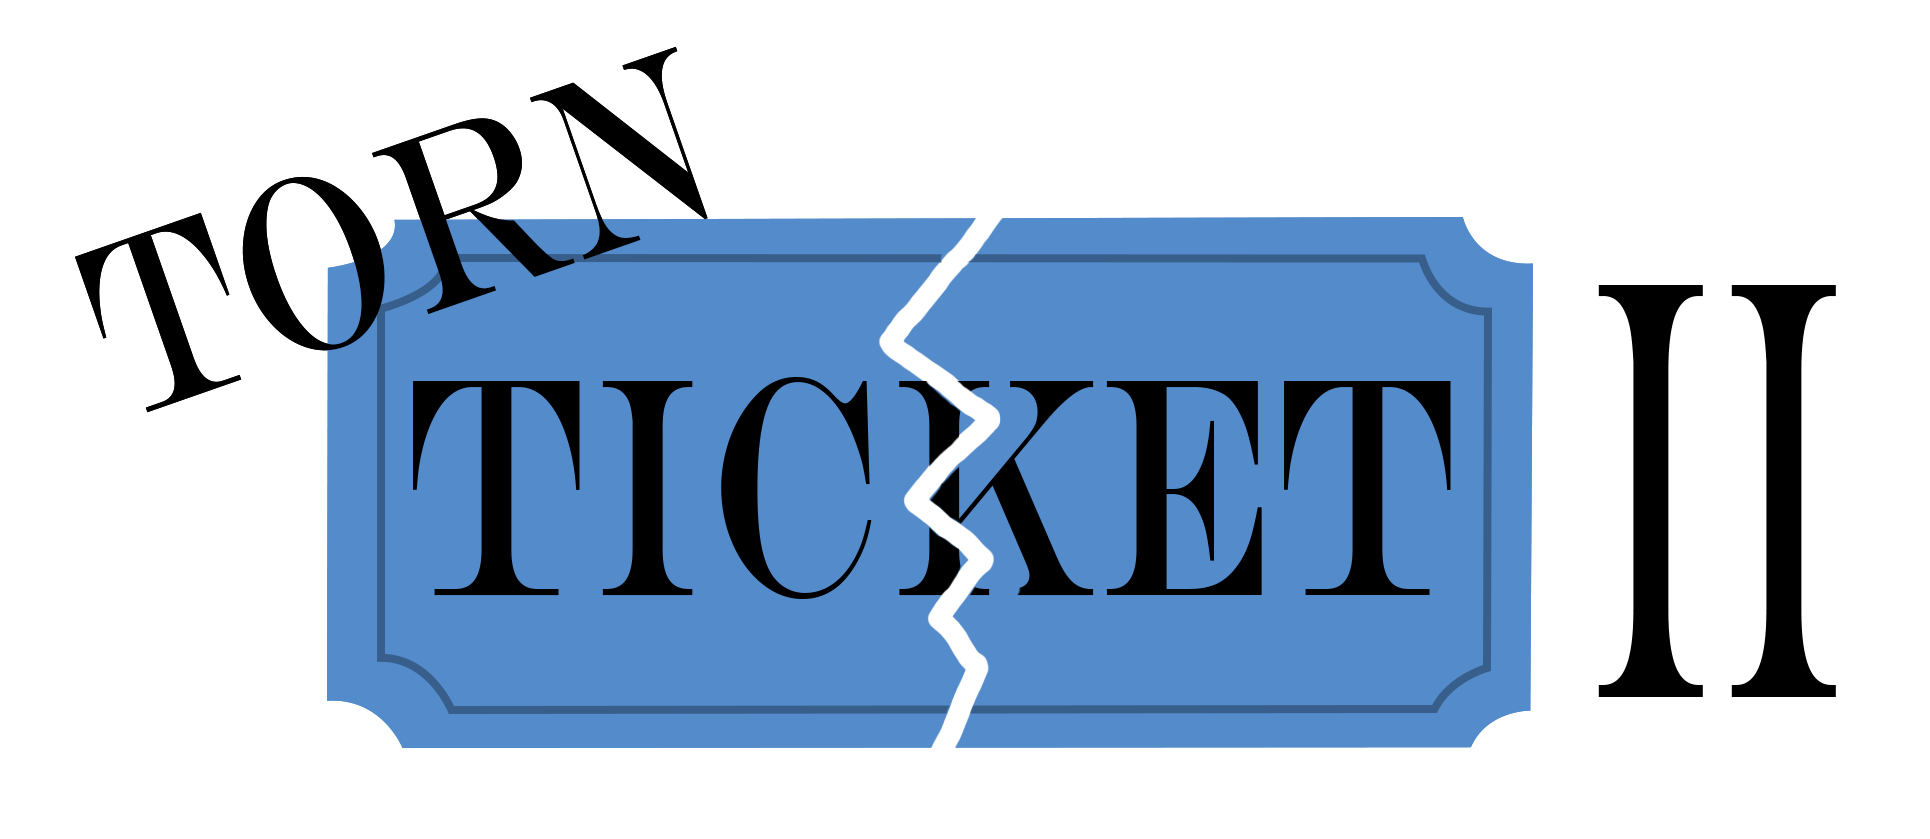 Torn Ticket II